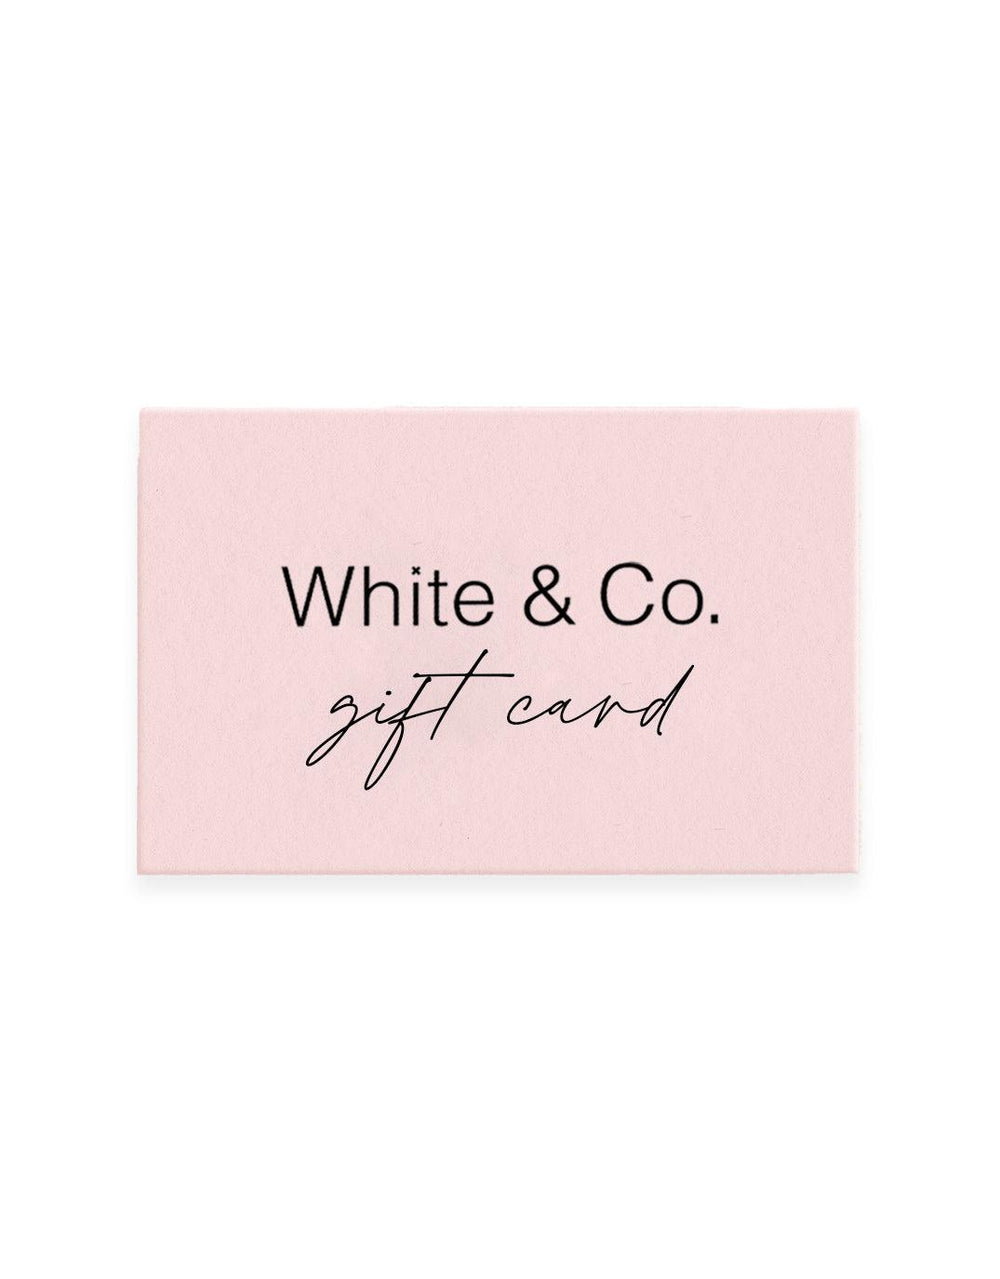 White & Co. - White & Co. Gift Card - White & Co Living Gift Cards